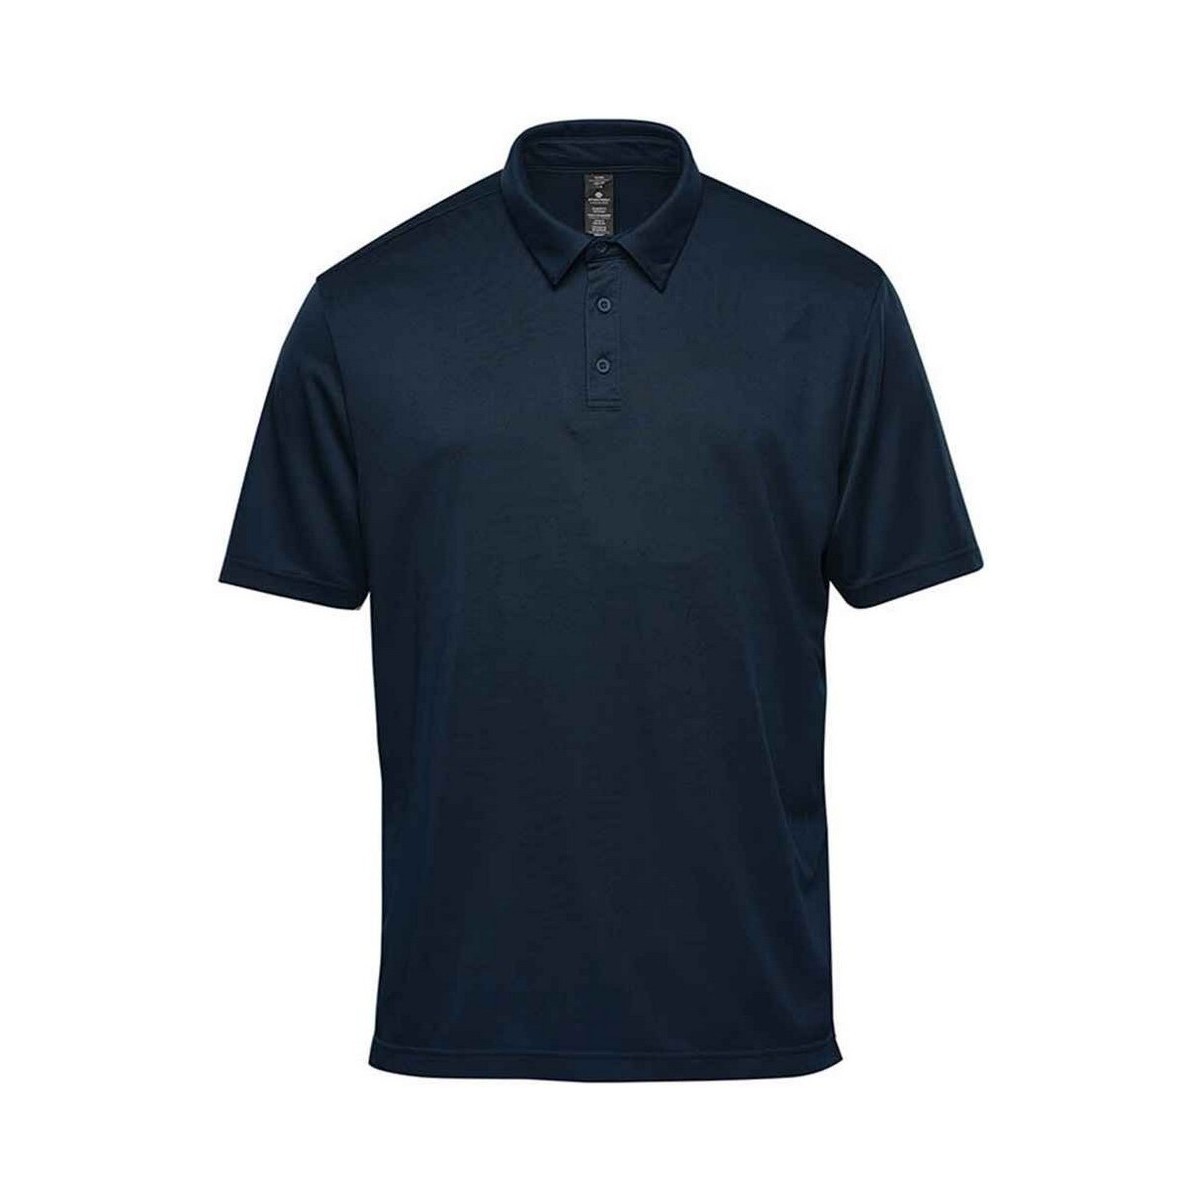 Vêtements Homme Brunello Cucinelli Kids logo-embroidered cotton polo shirt Weiß  Bleu